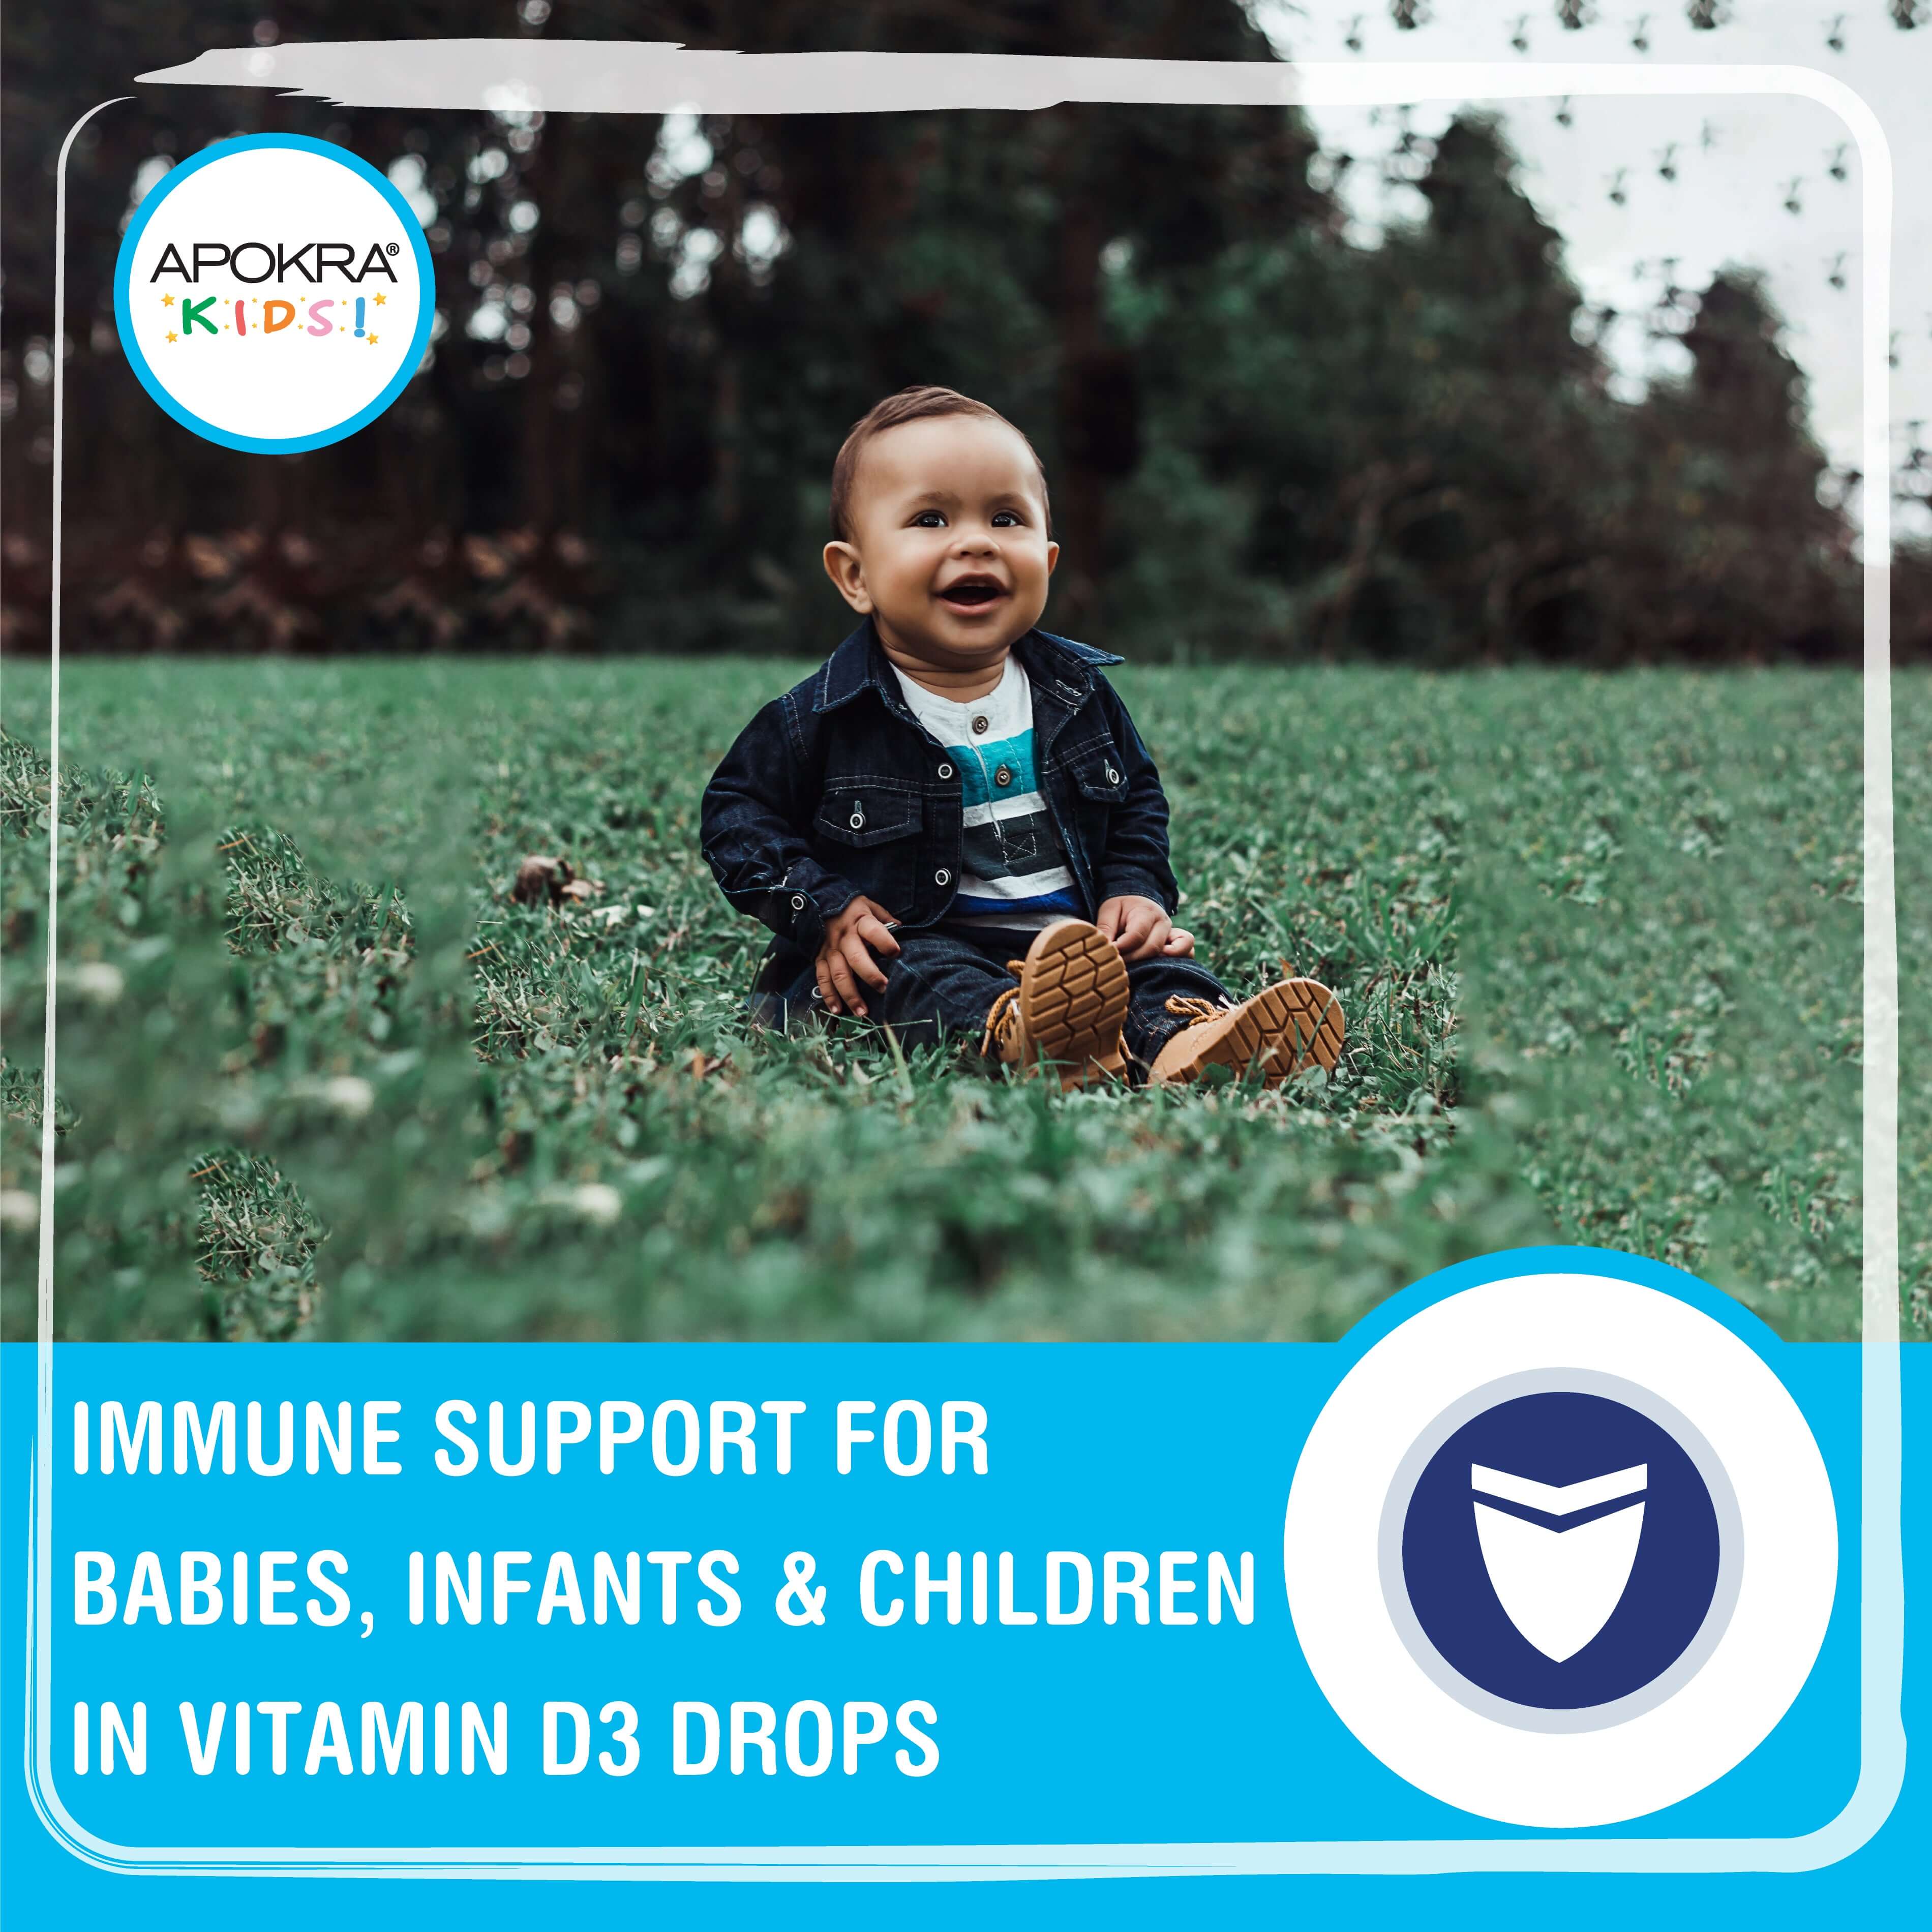 Vitamin D3 Drops for immune support - APOKRA